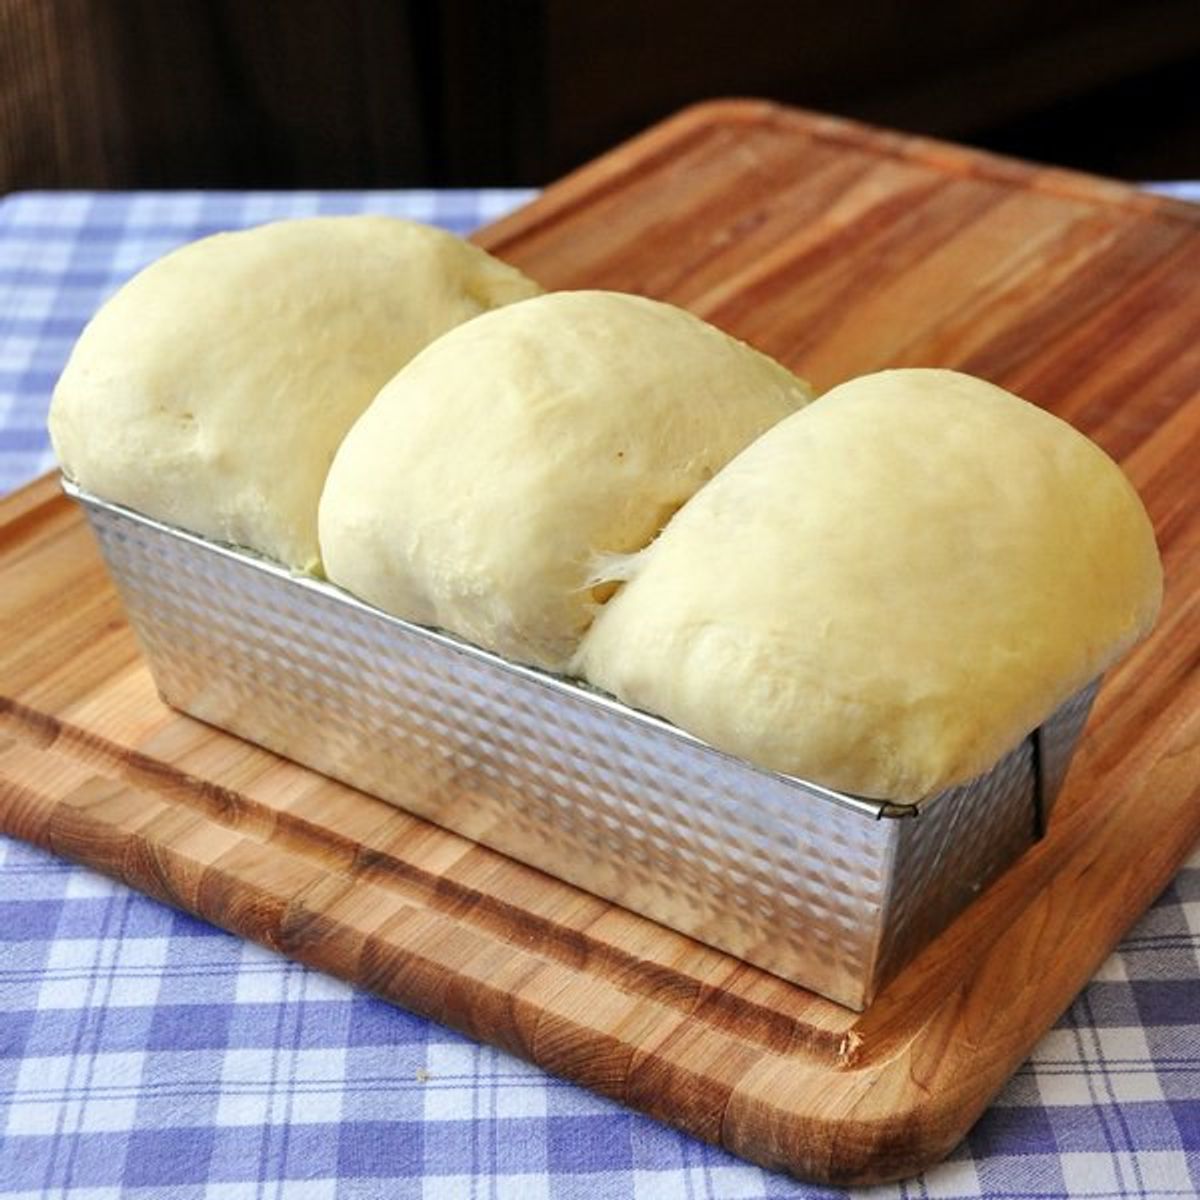 5 Things You Can Do When You're Not Kneading Dough